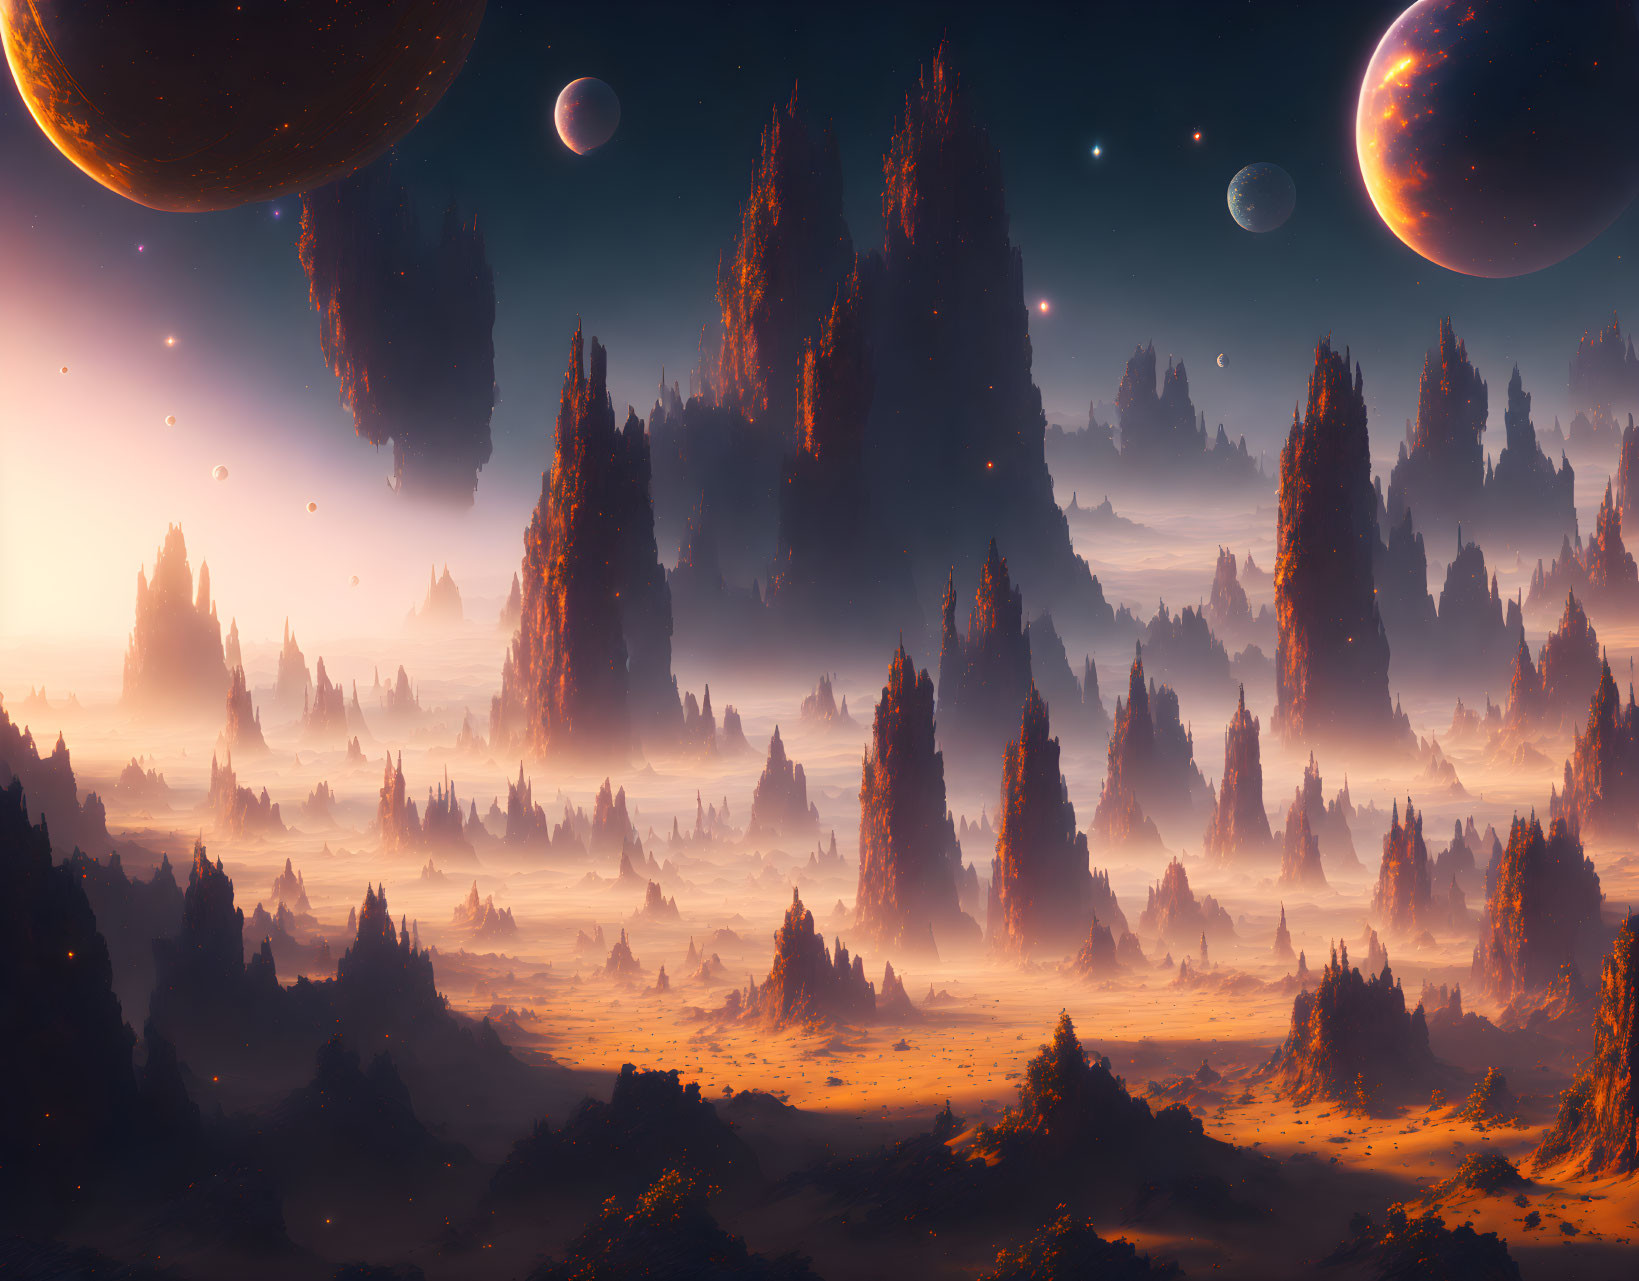 Fantastical landscape with towering rock formations under alien sky